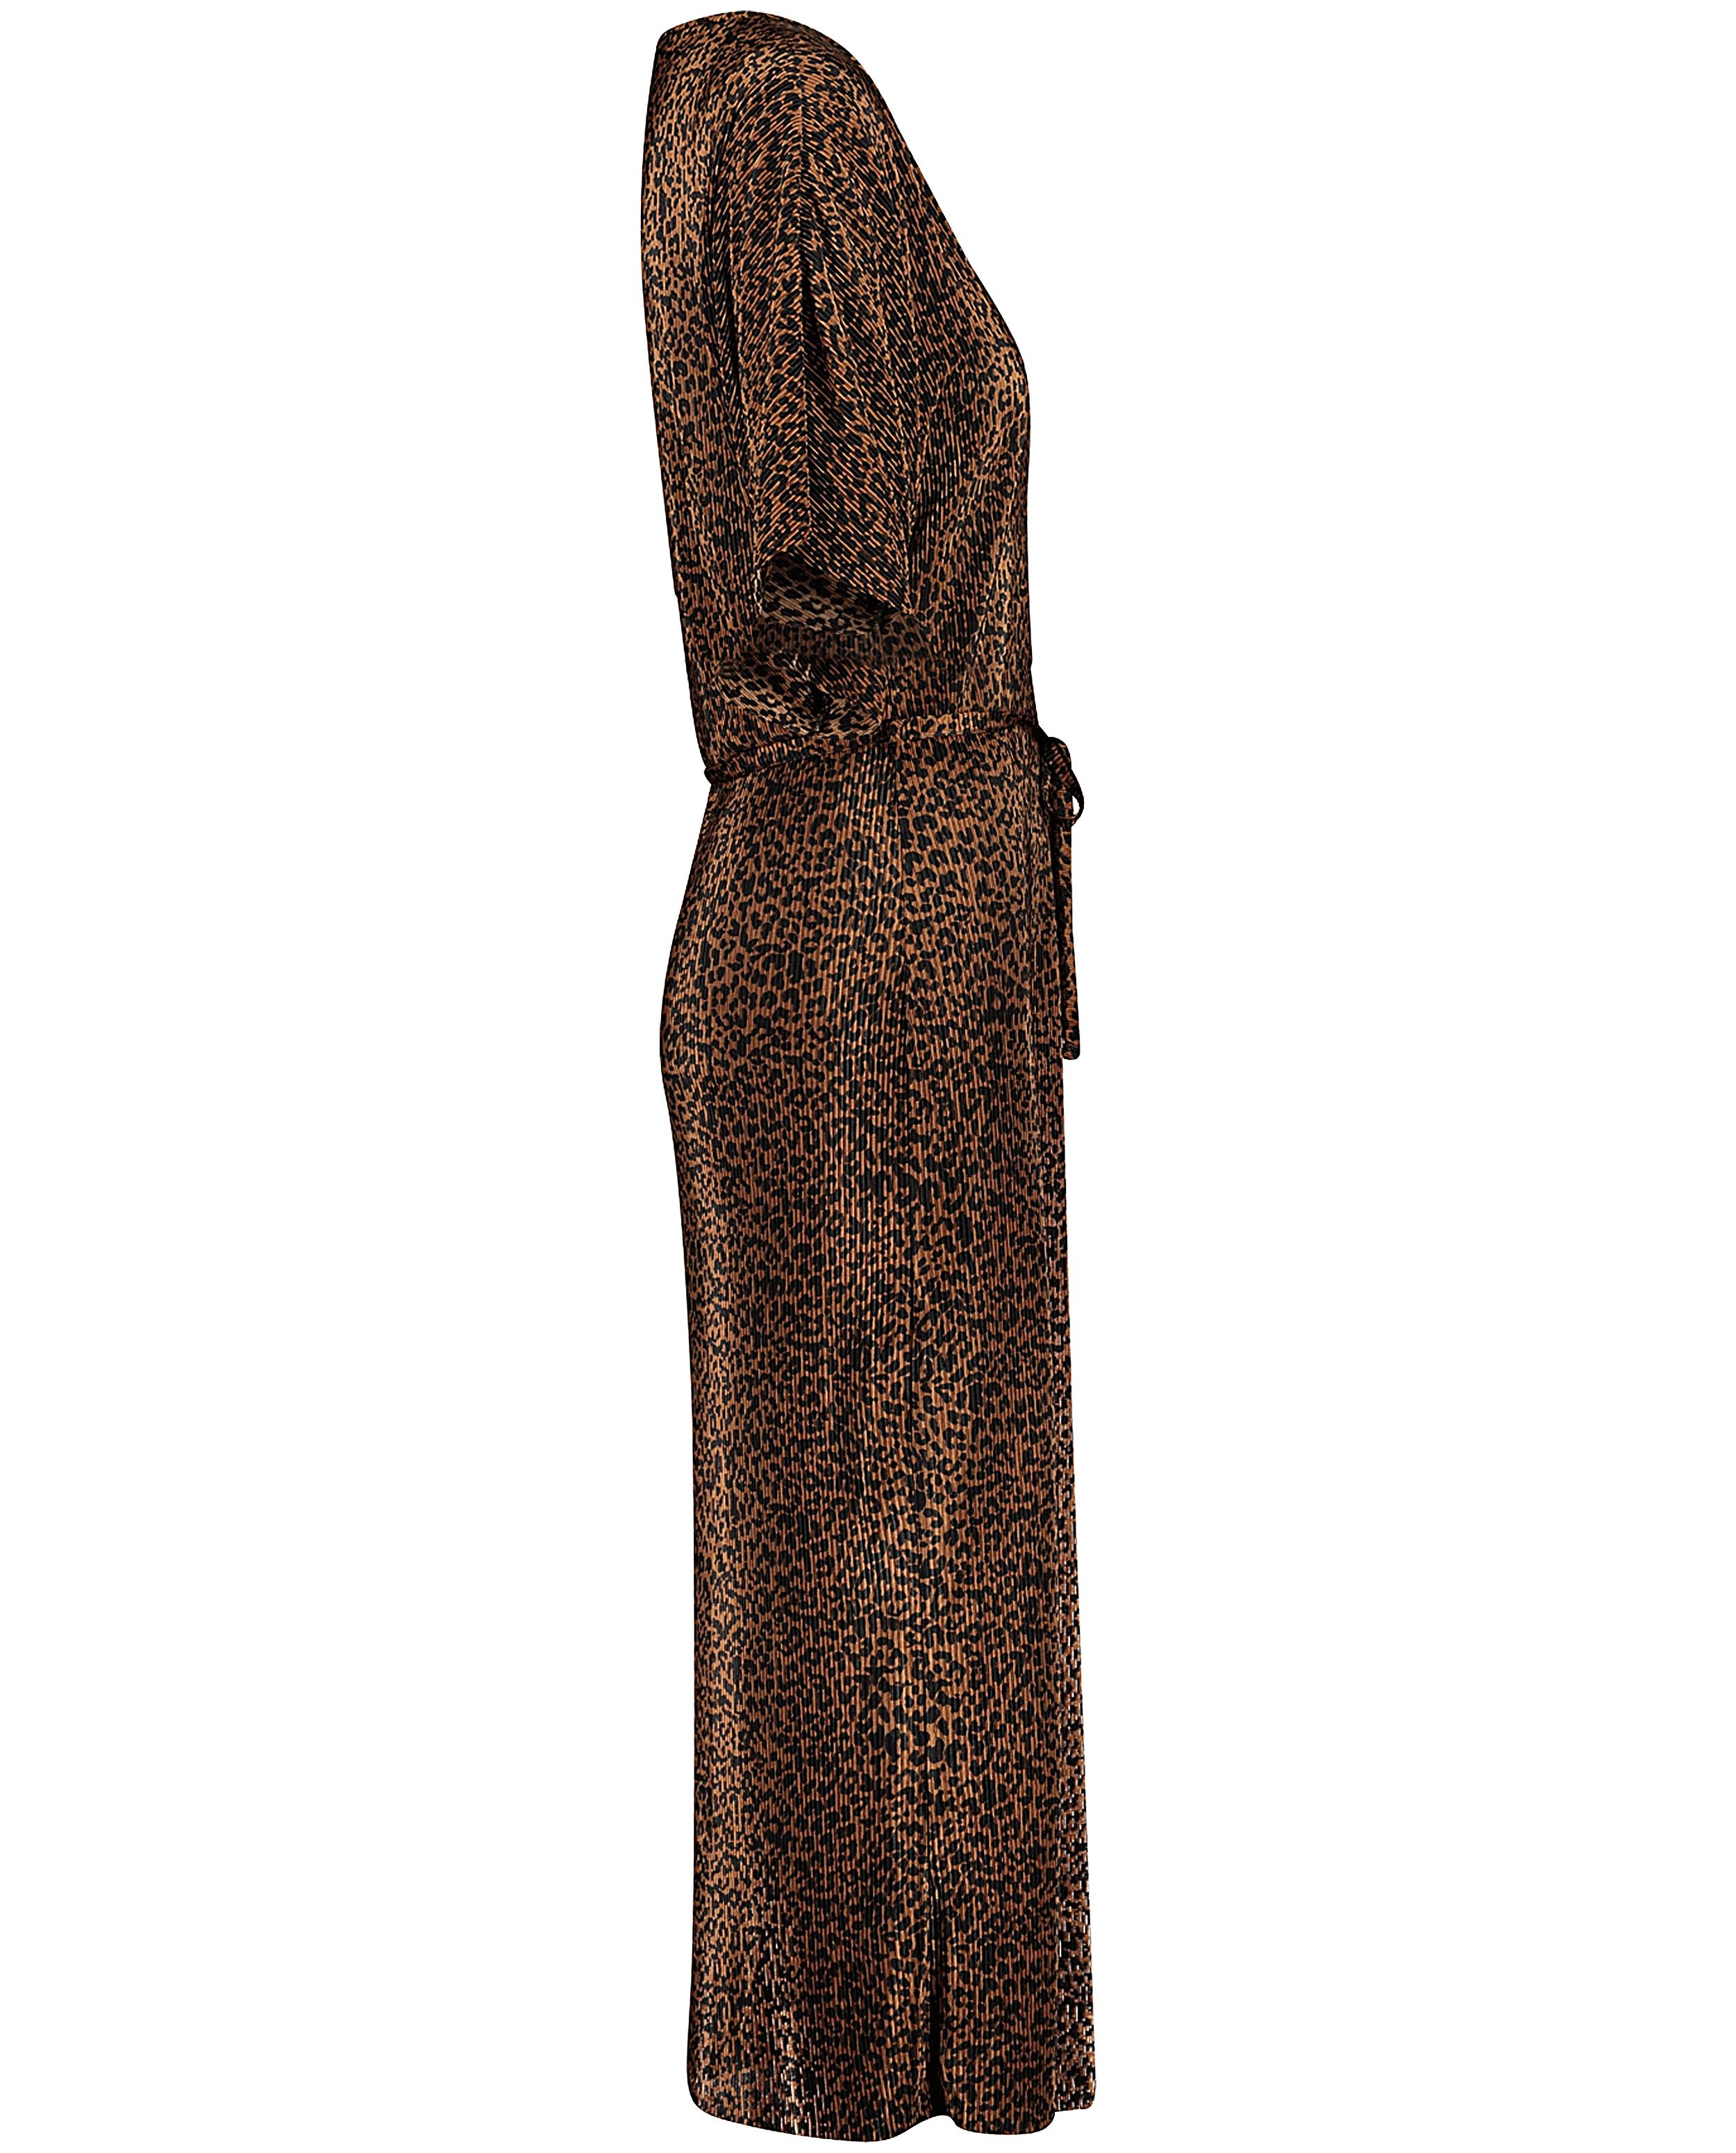 Robes - Robe avec imprimé léopard